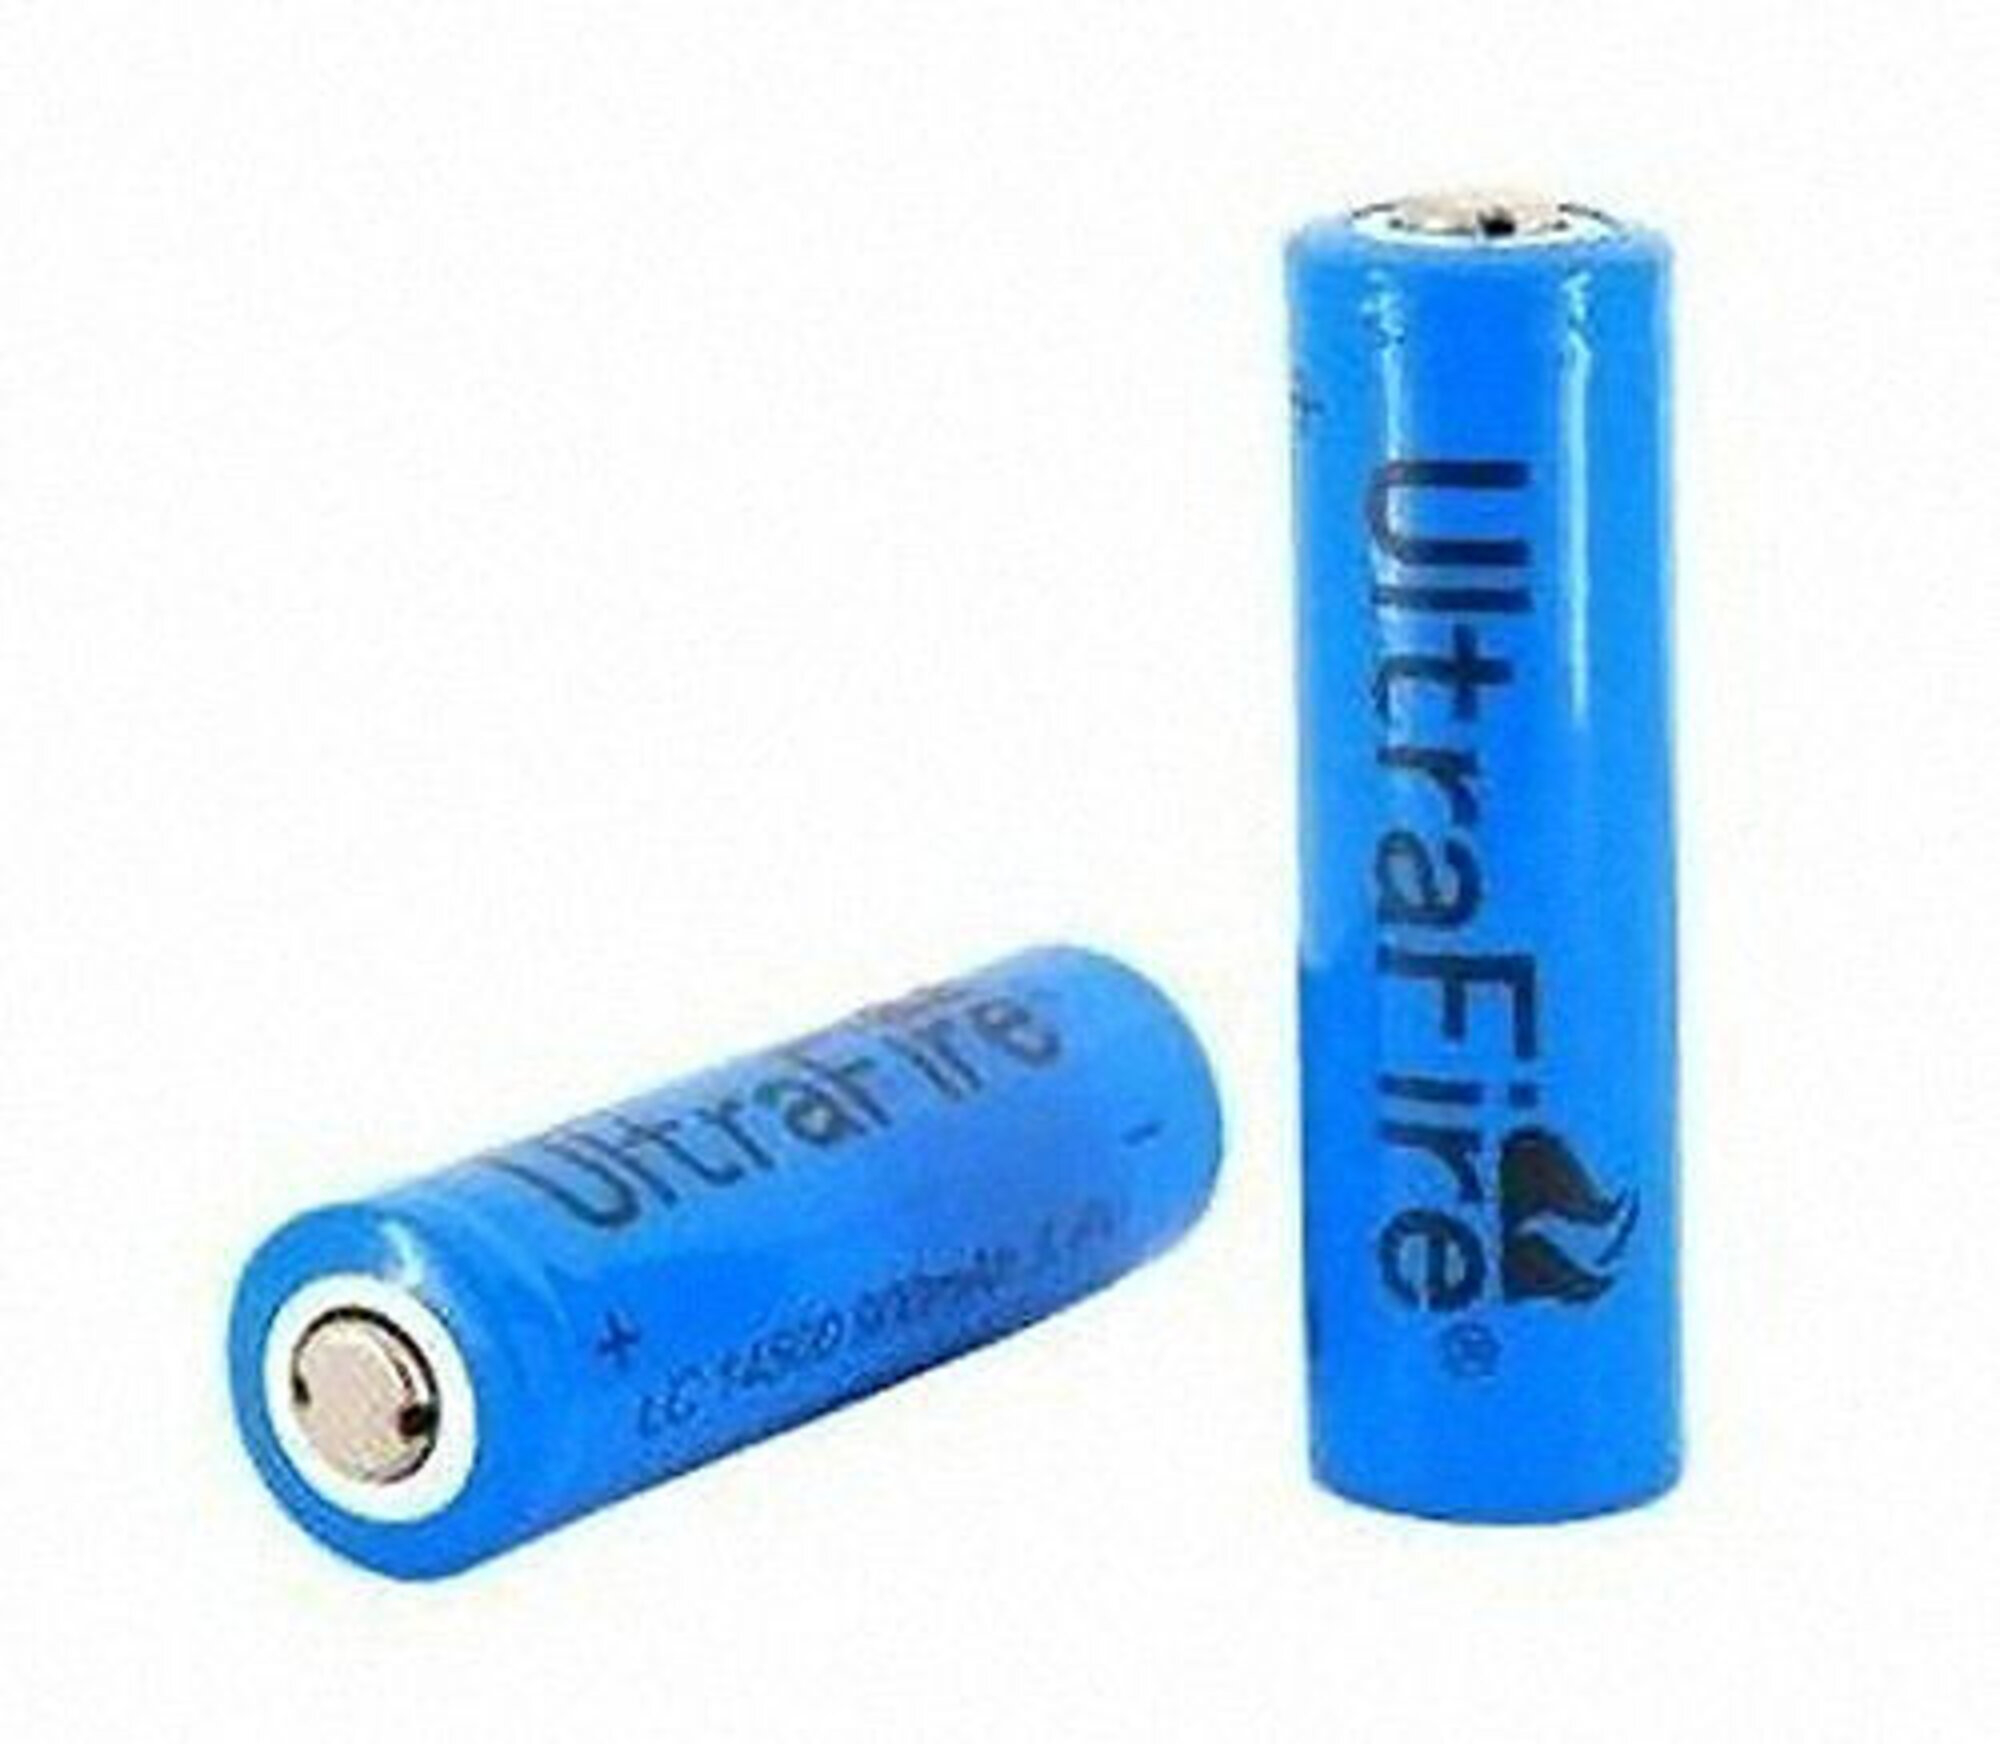 UltraFire 14500 - køb dit AAA Li-Ion genopladelige batteri hos Alabazar